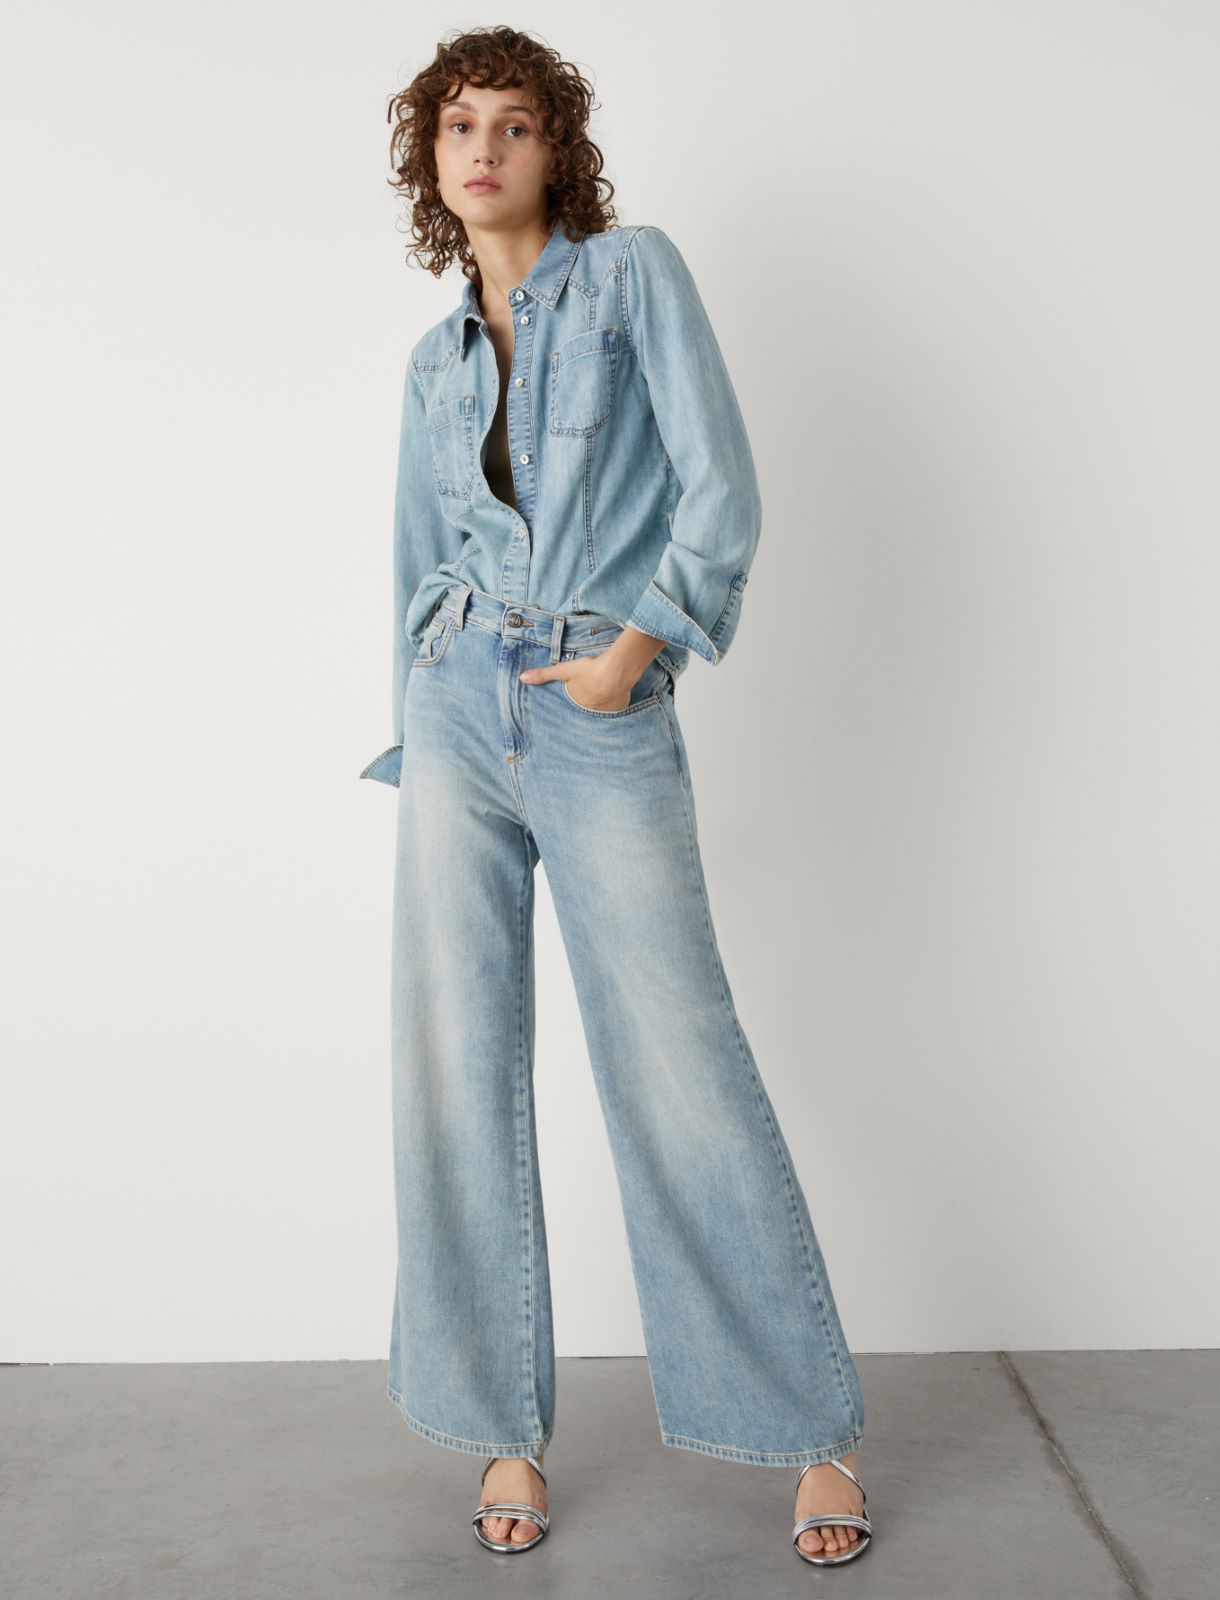 Denim shirt, blue jeans | Marella